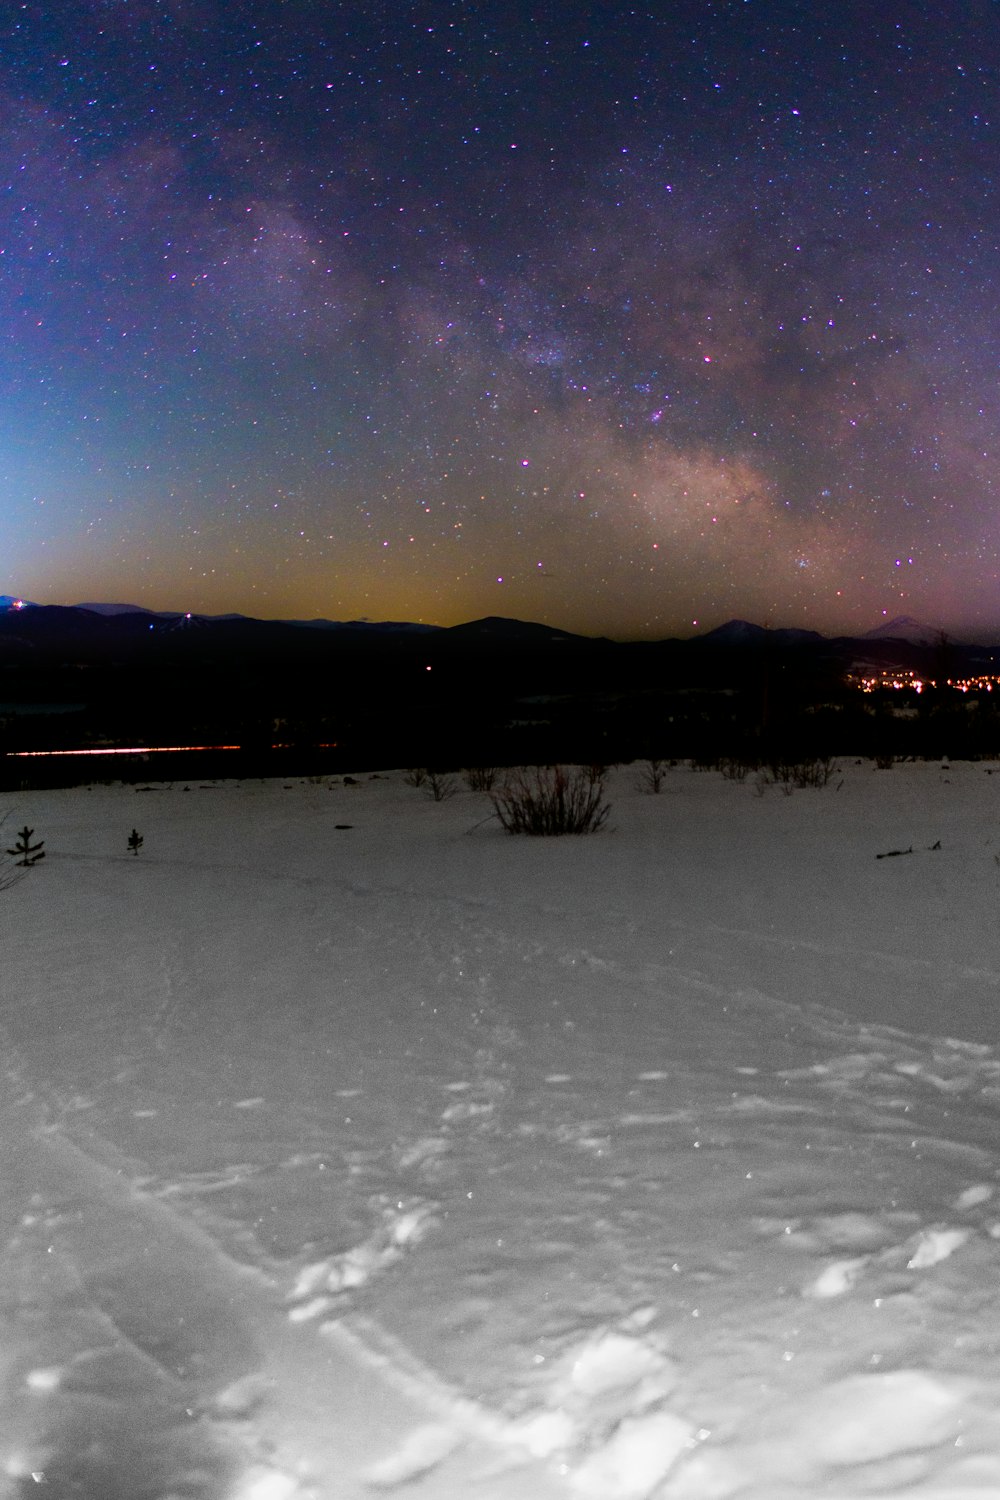 snow field near mountain under starry night